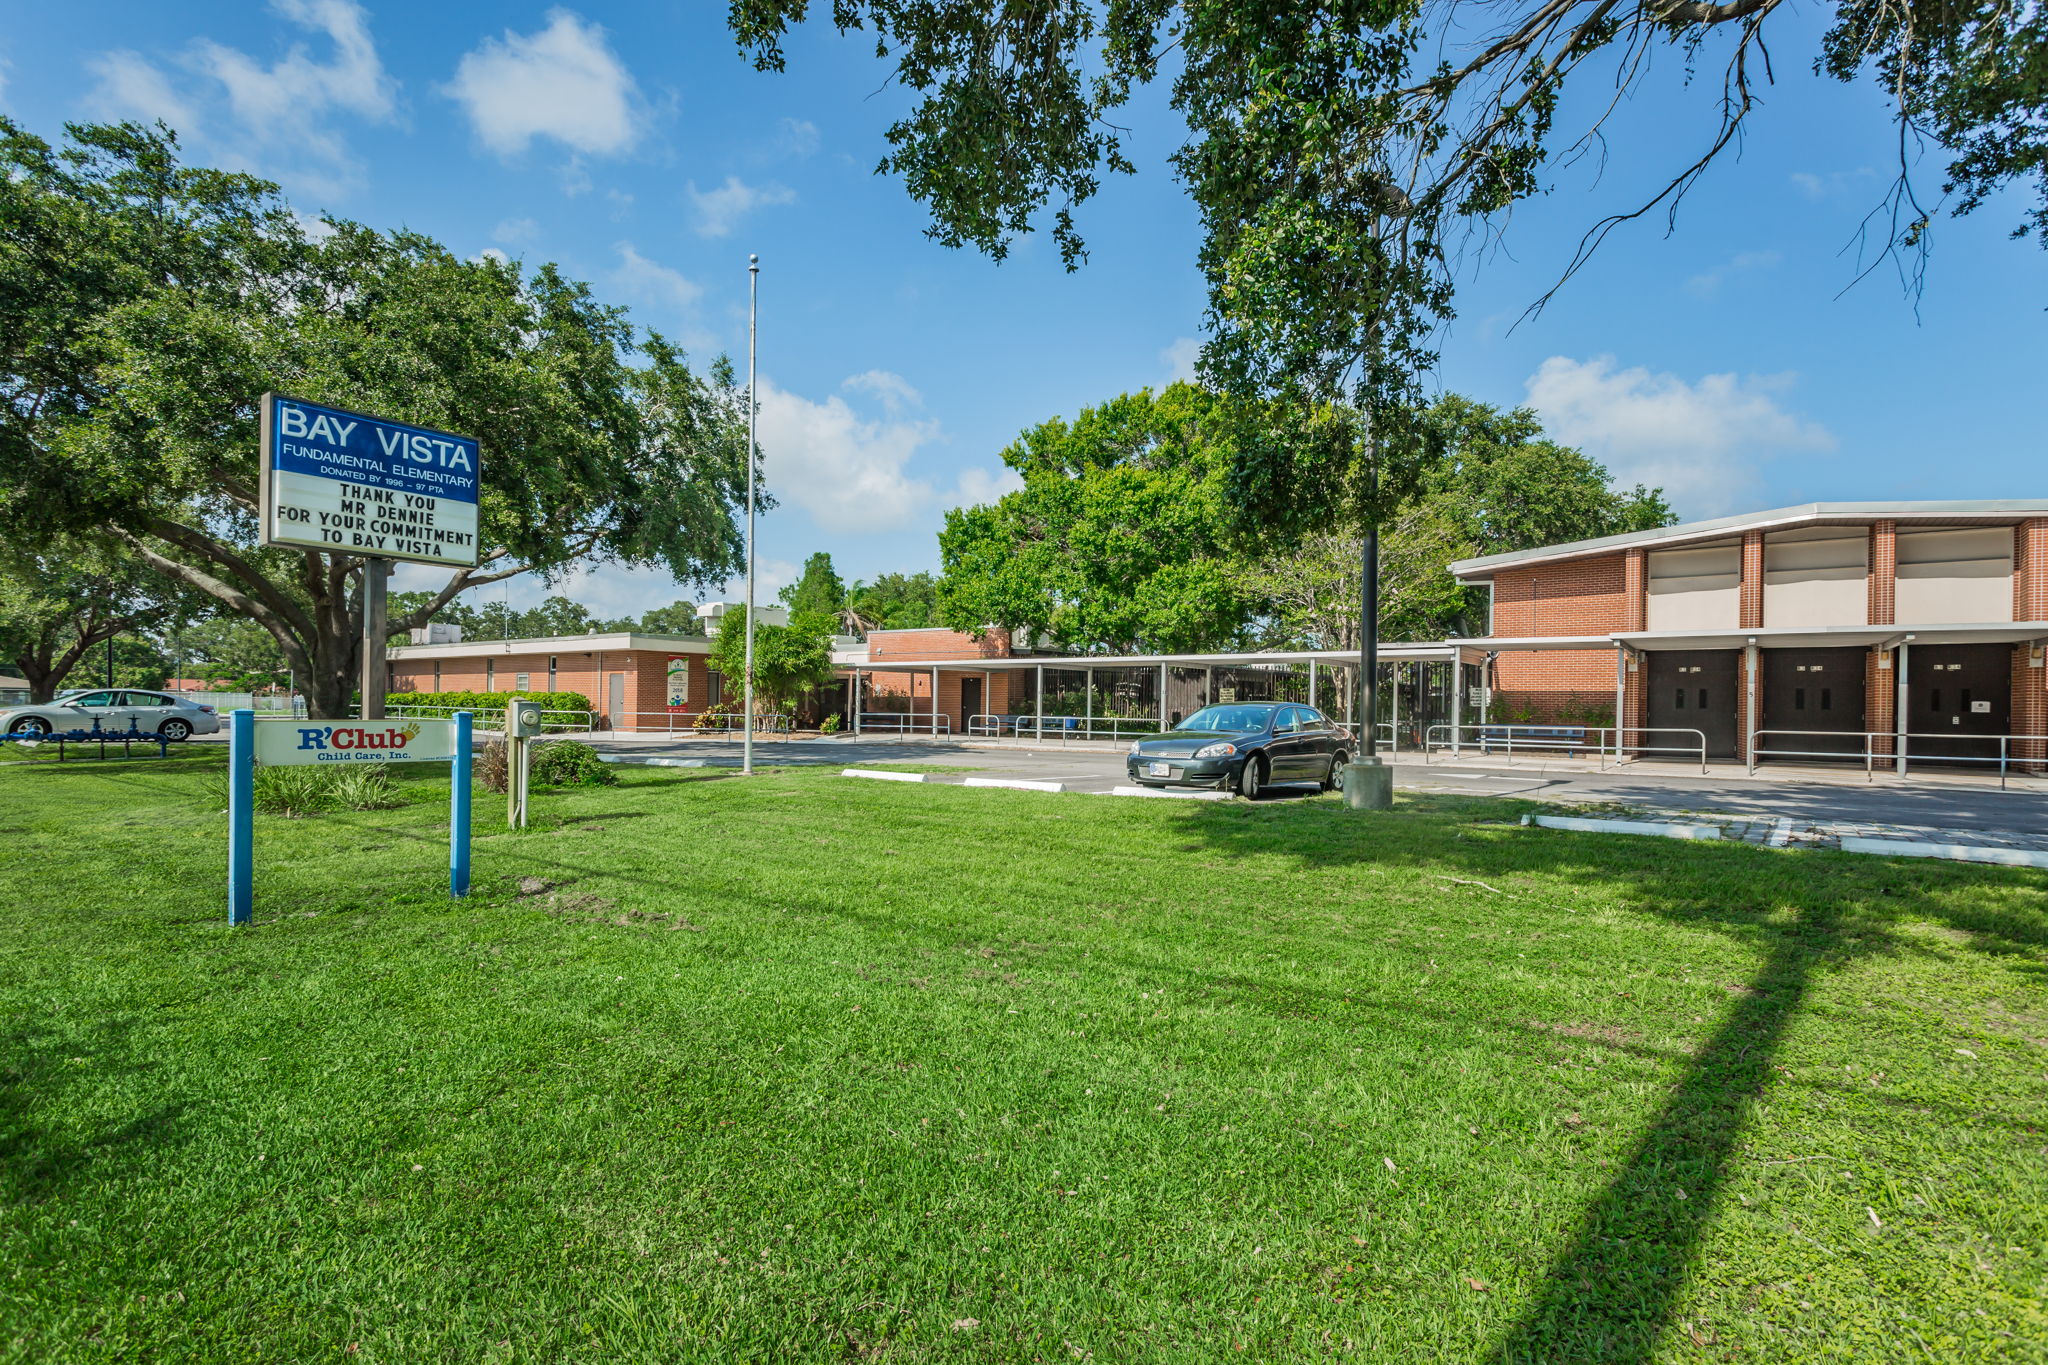 Bay Vista Elementary